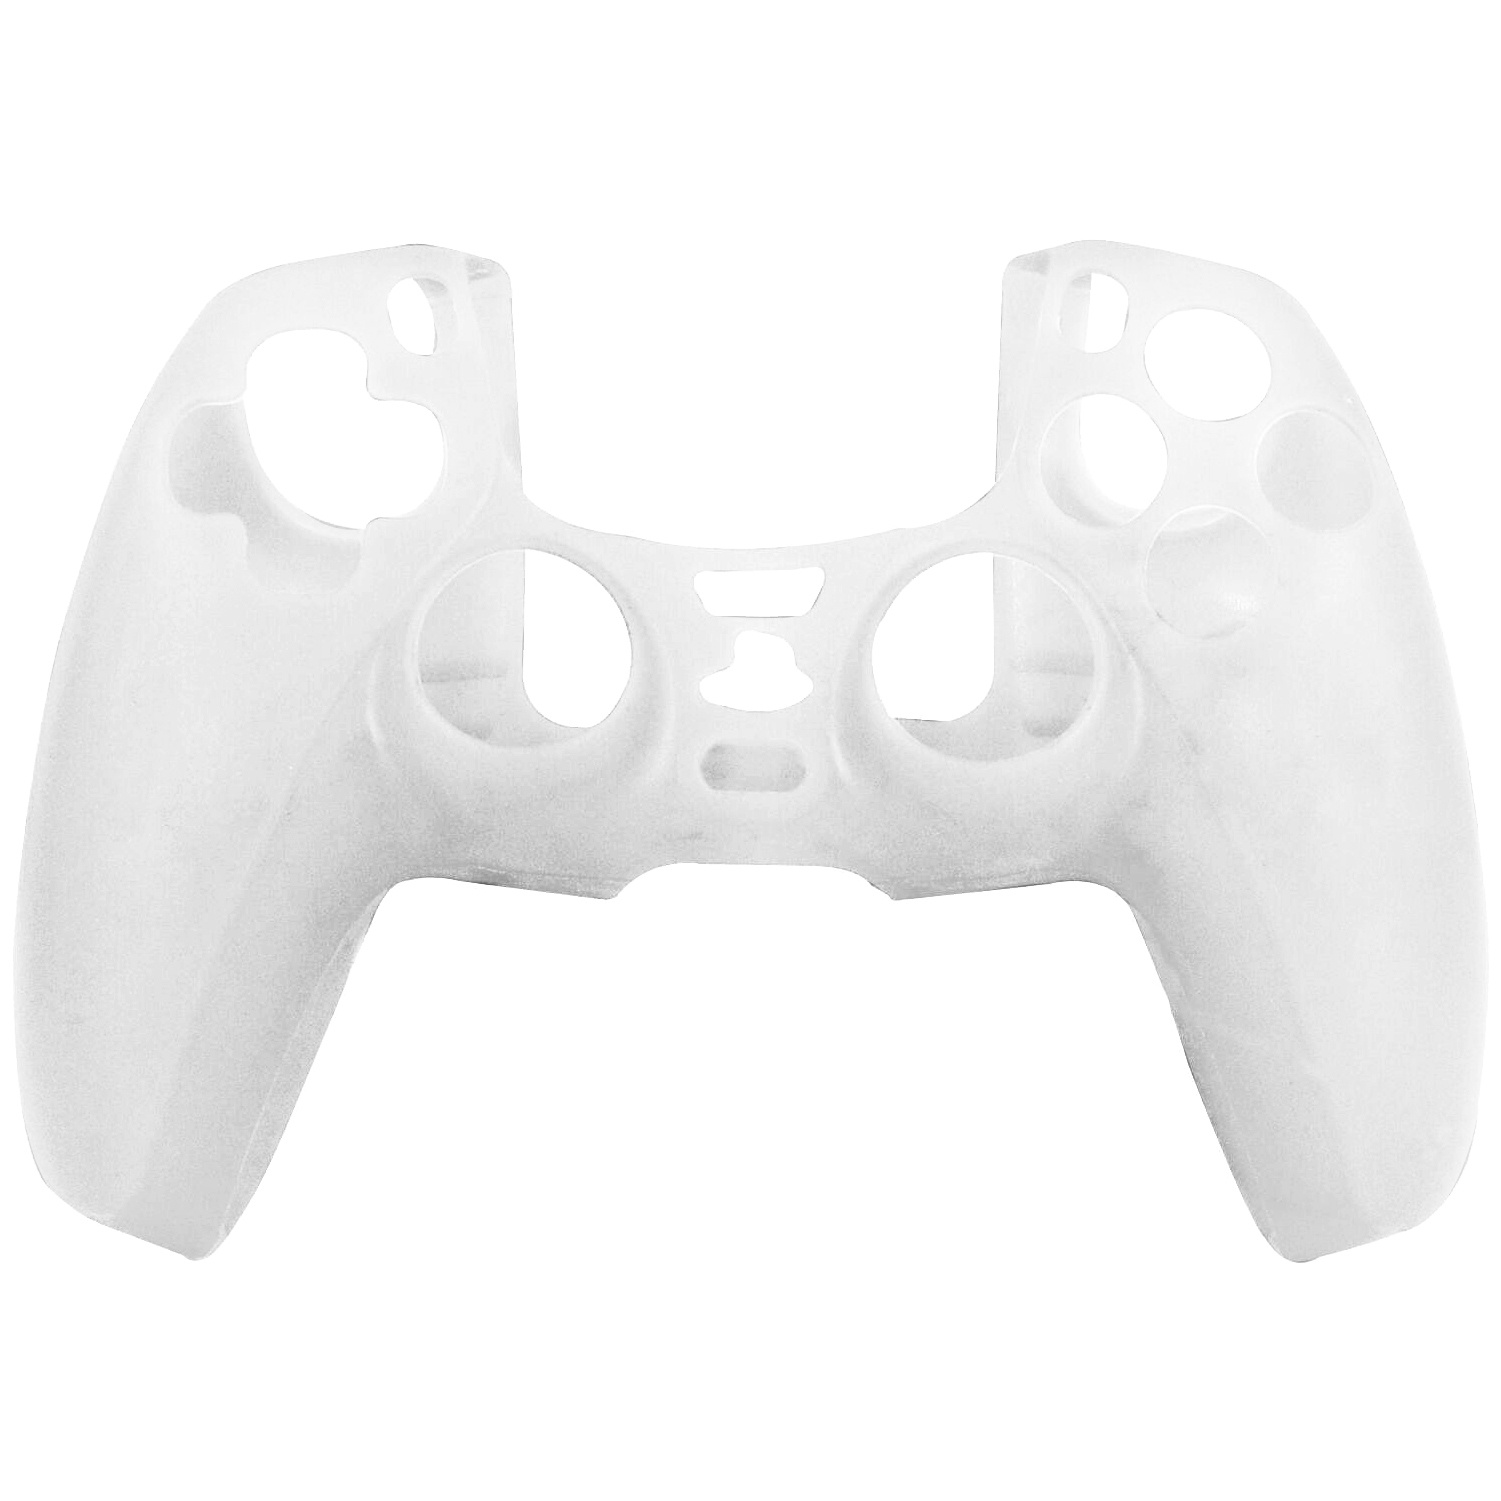 Silicone Case Cover Skin for PS5 DualSense Controller - White